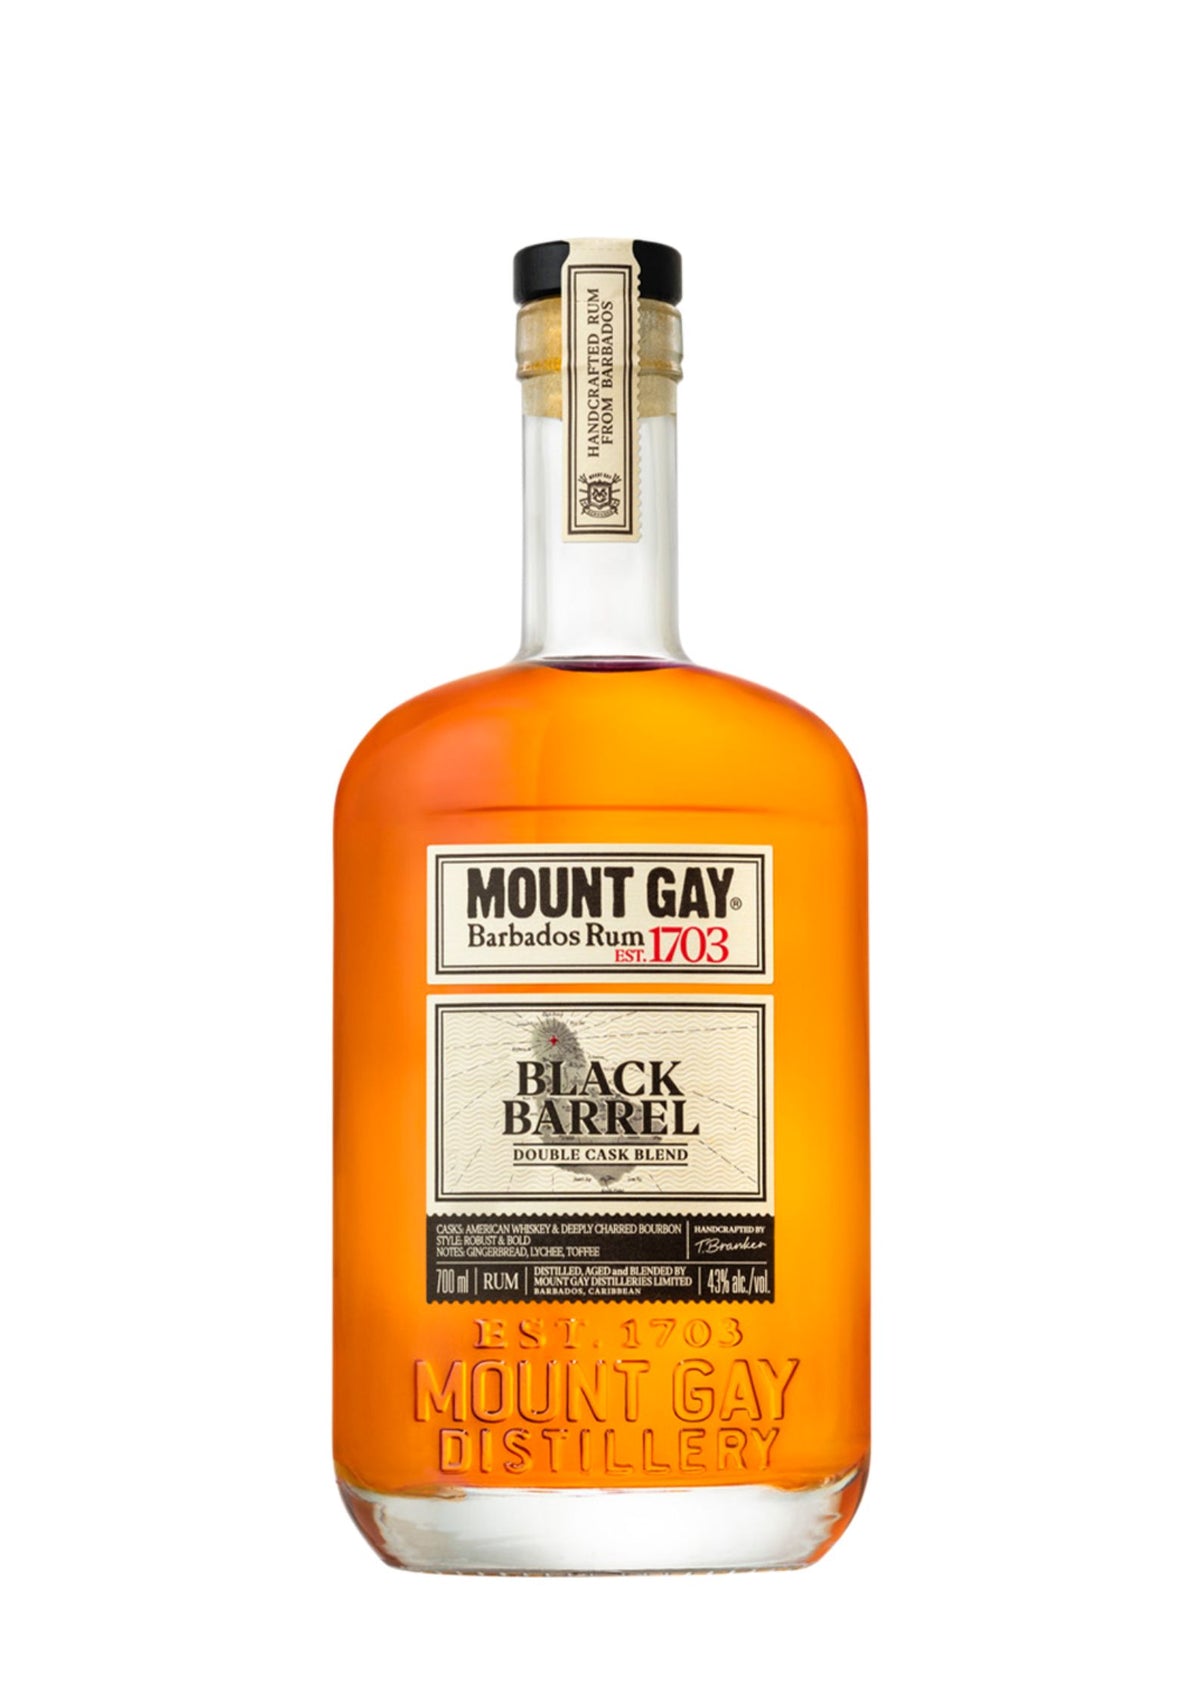 Mount Gay Black Barrel Double Cask Blend, Barbados Rum, 43%